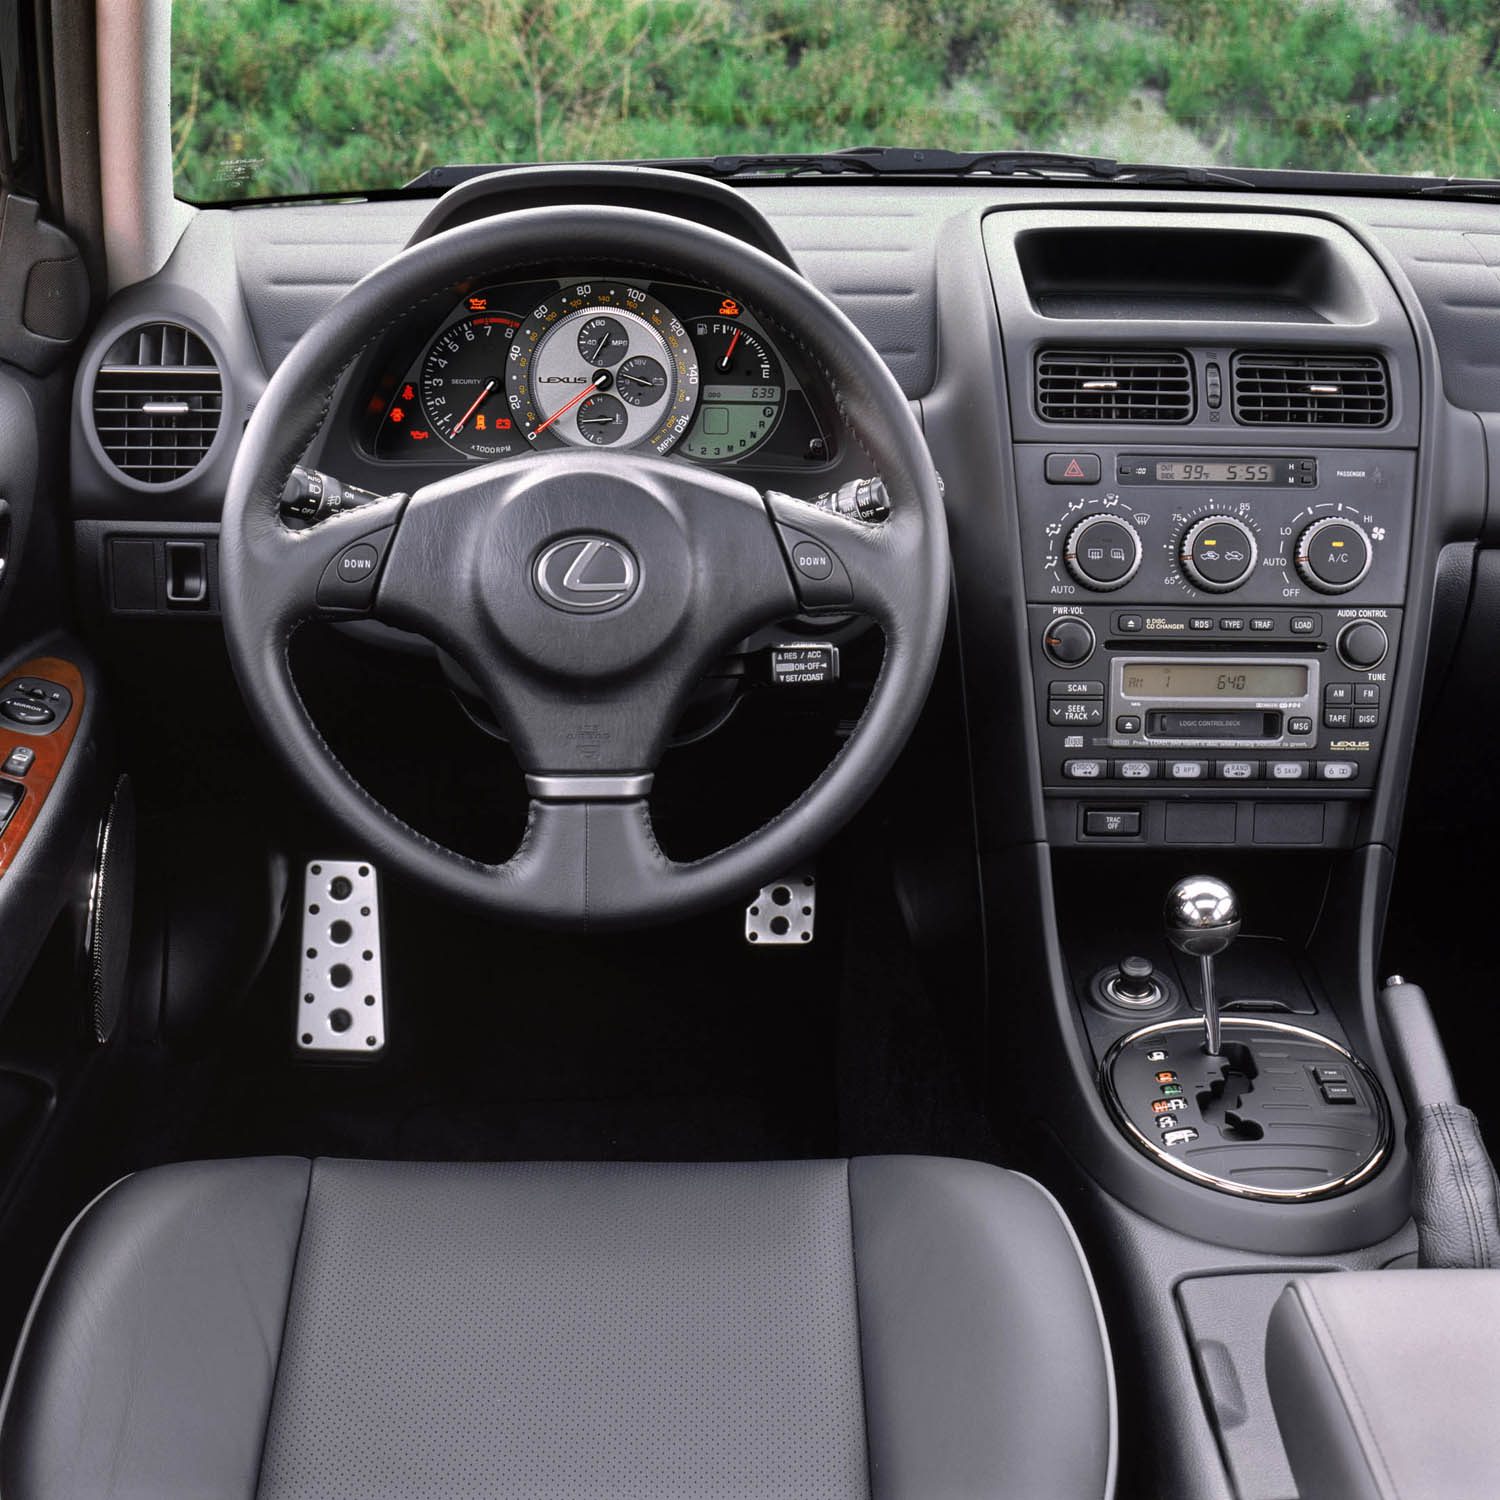 2002 Lexus IS 300 interior 002 - Lexus USA Newsroom